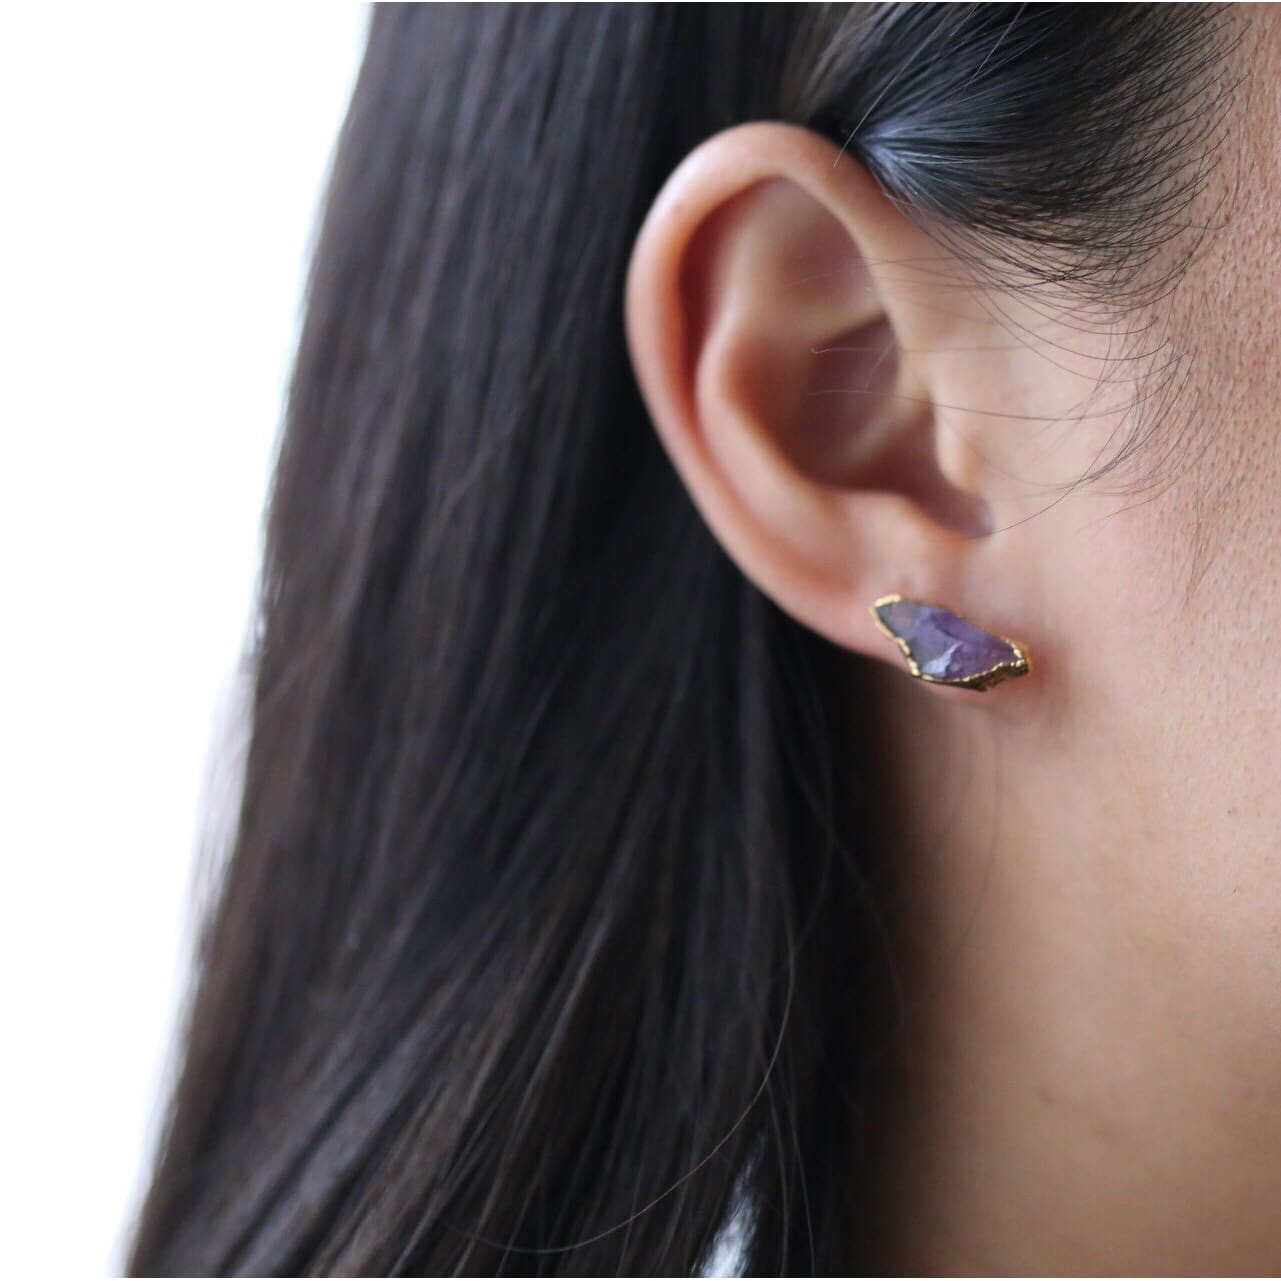 Large Raw Amethyst Stud Earrings in Sterling Silver Gemstone